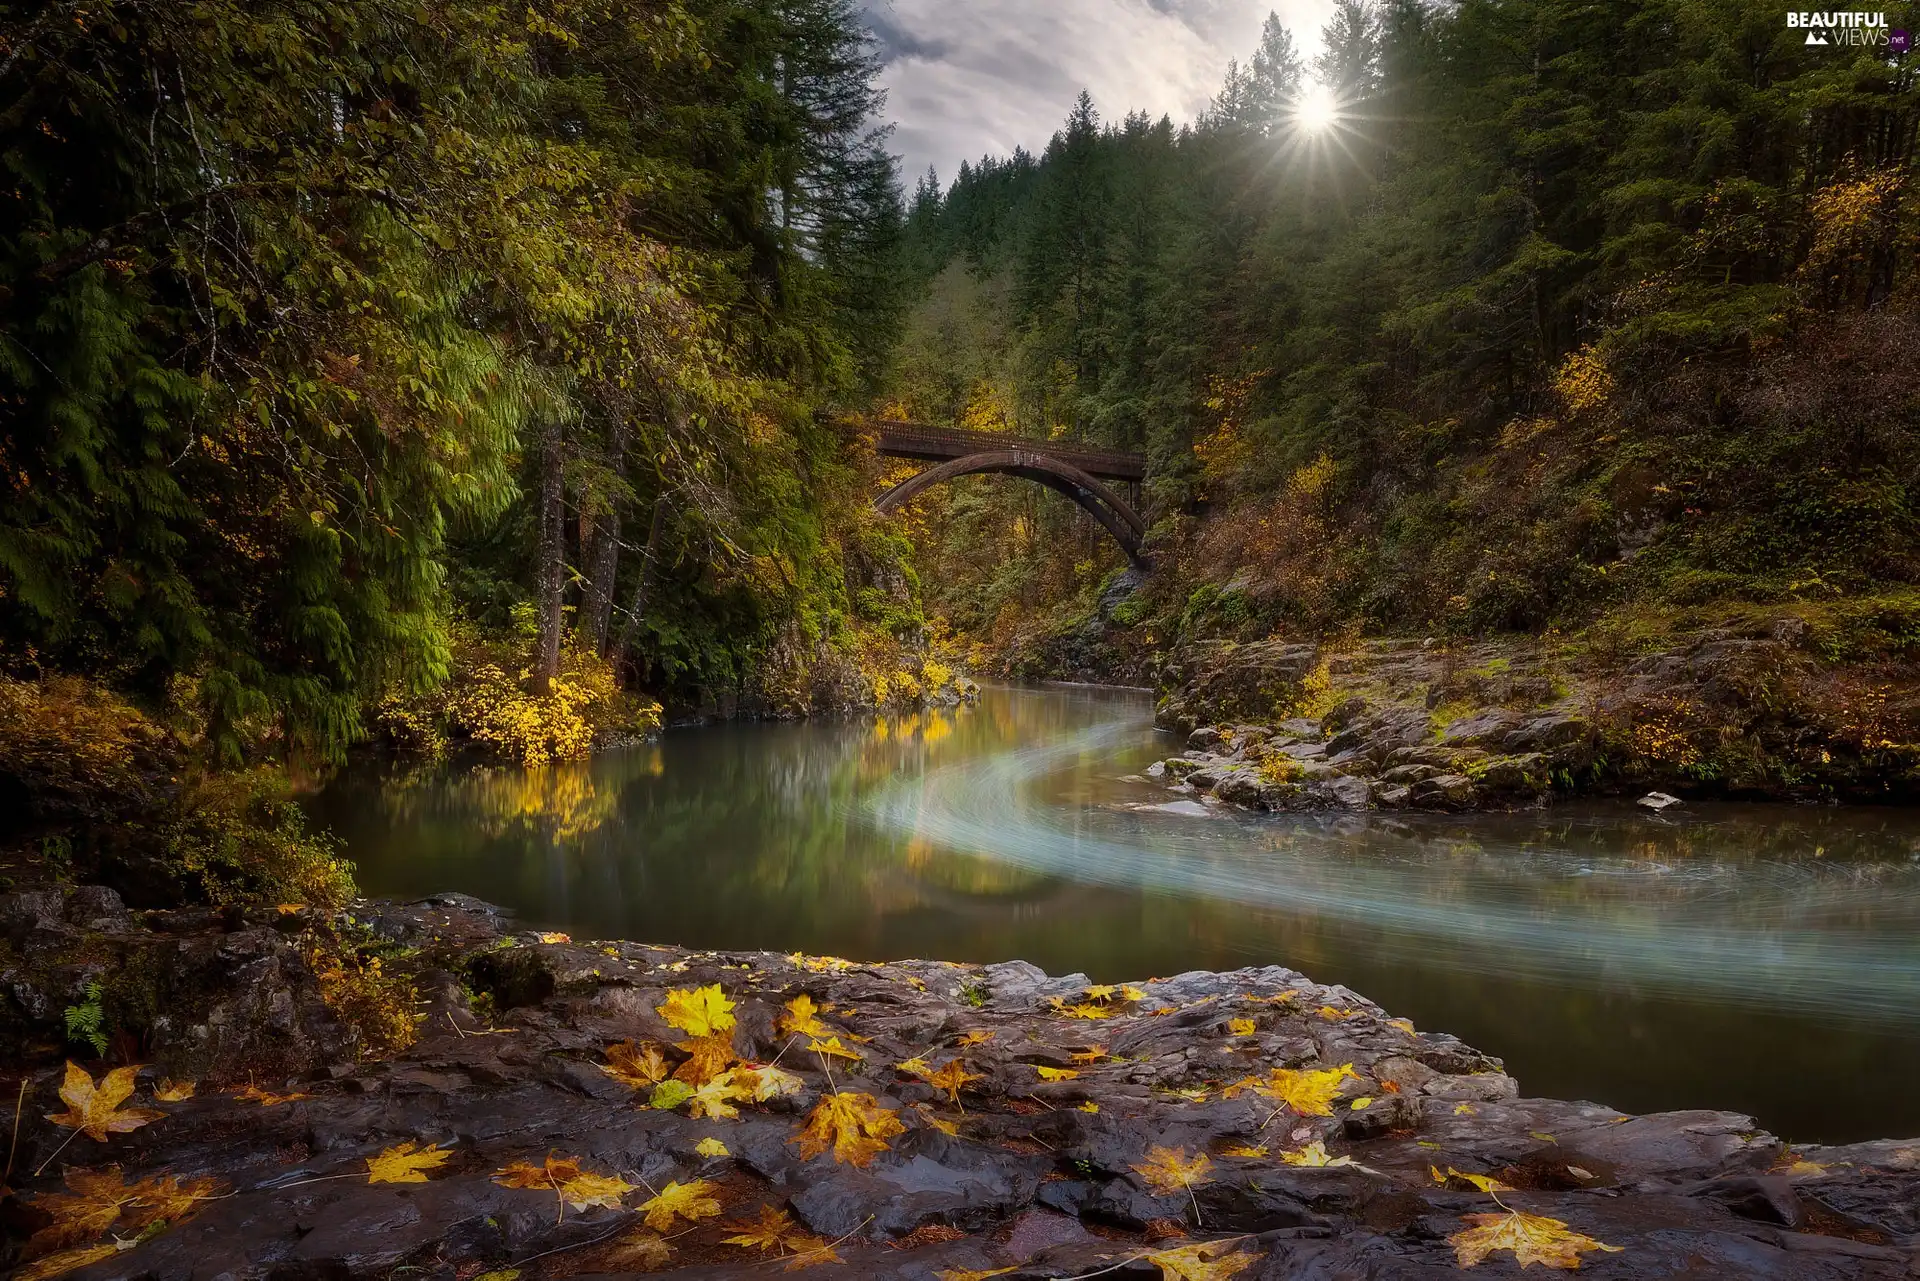 Autumn, forest, trees, viewes, Washington State, The United States, Moulton Falls Bridge, rocks, Lewis River